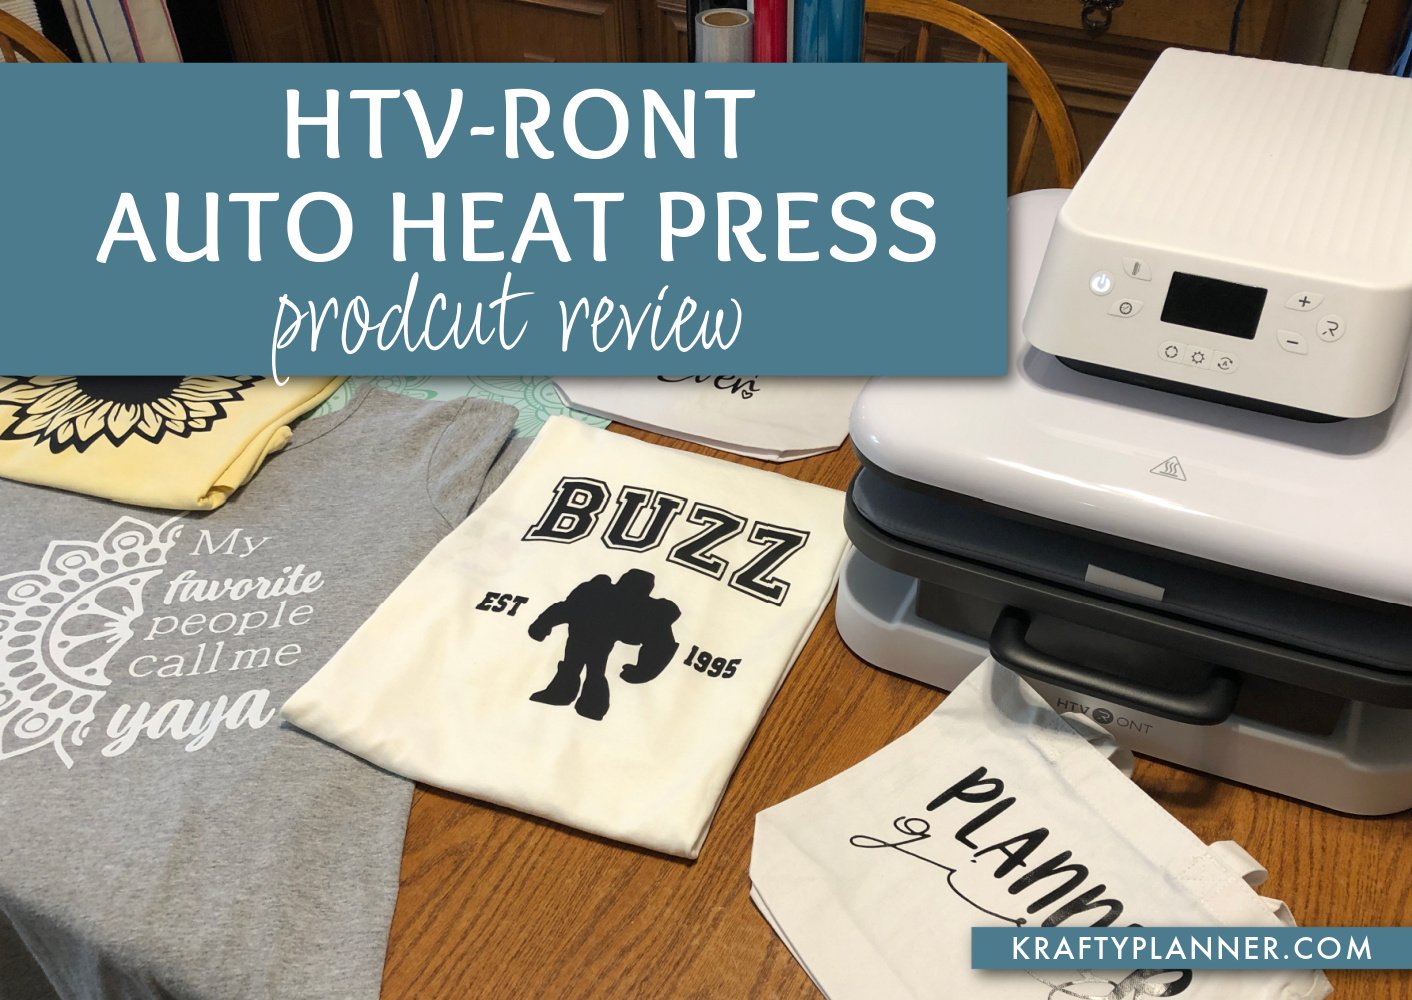 What's Inside that HTVRont Auto Heat Press Mat? 